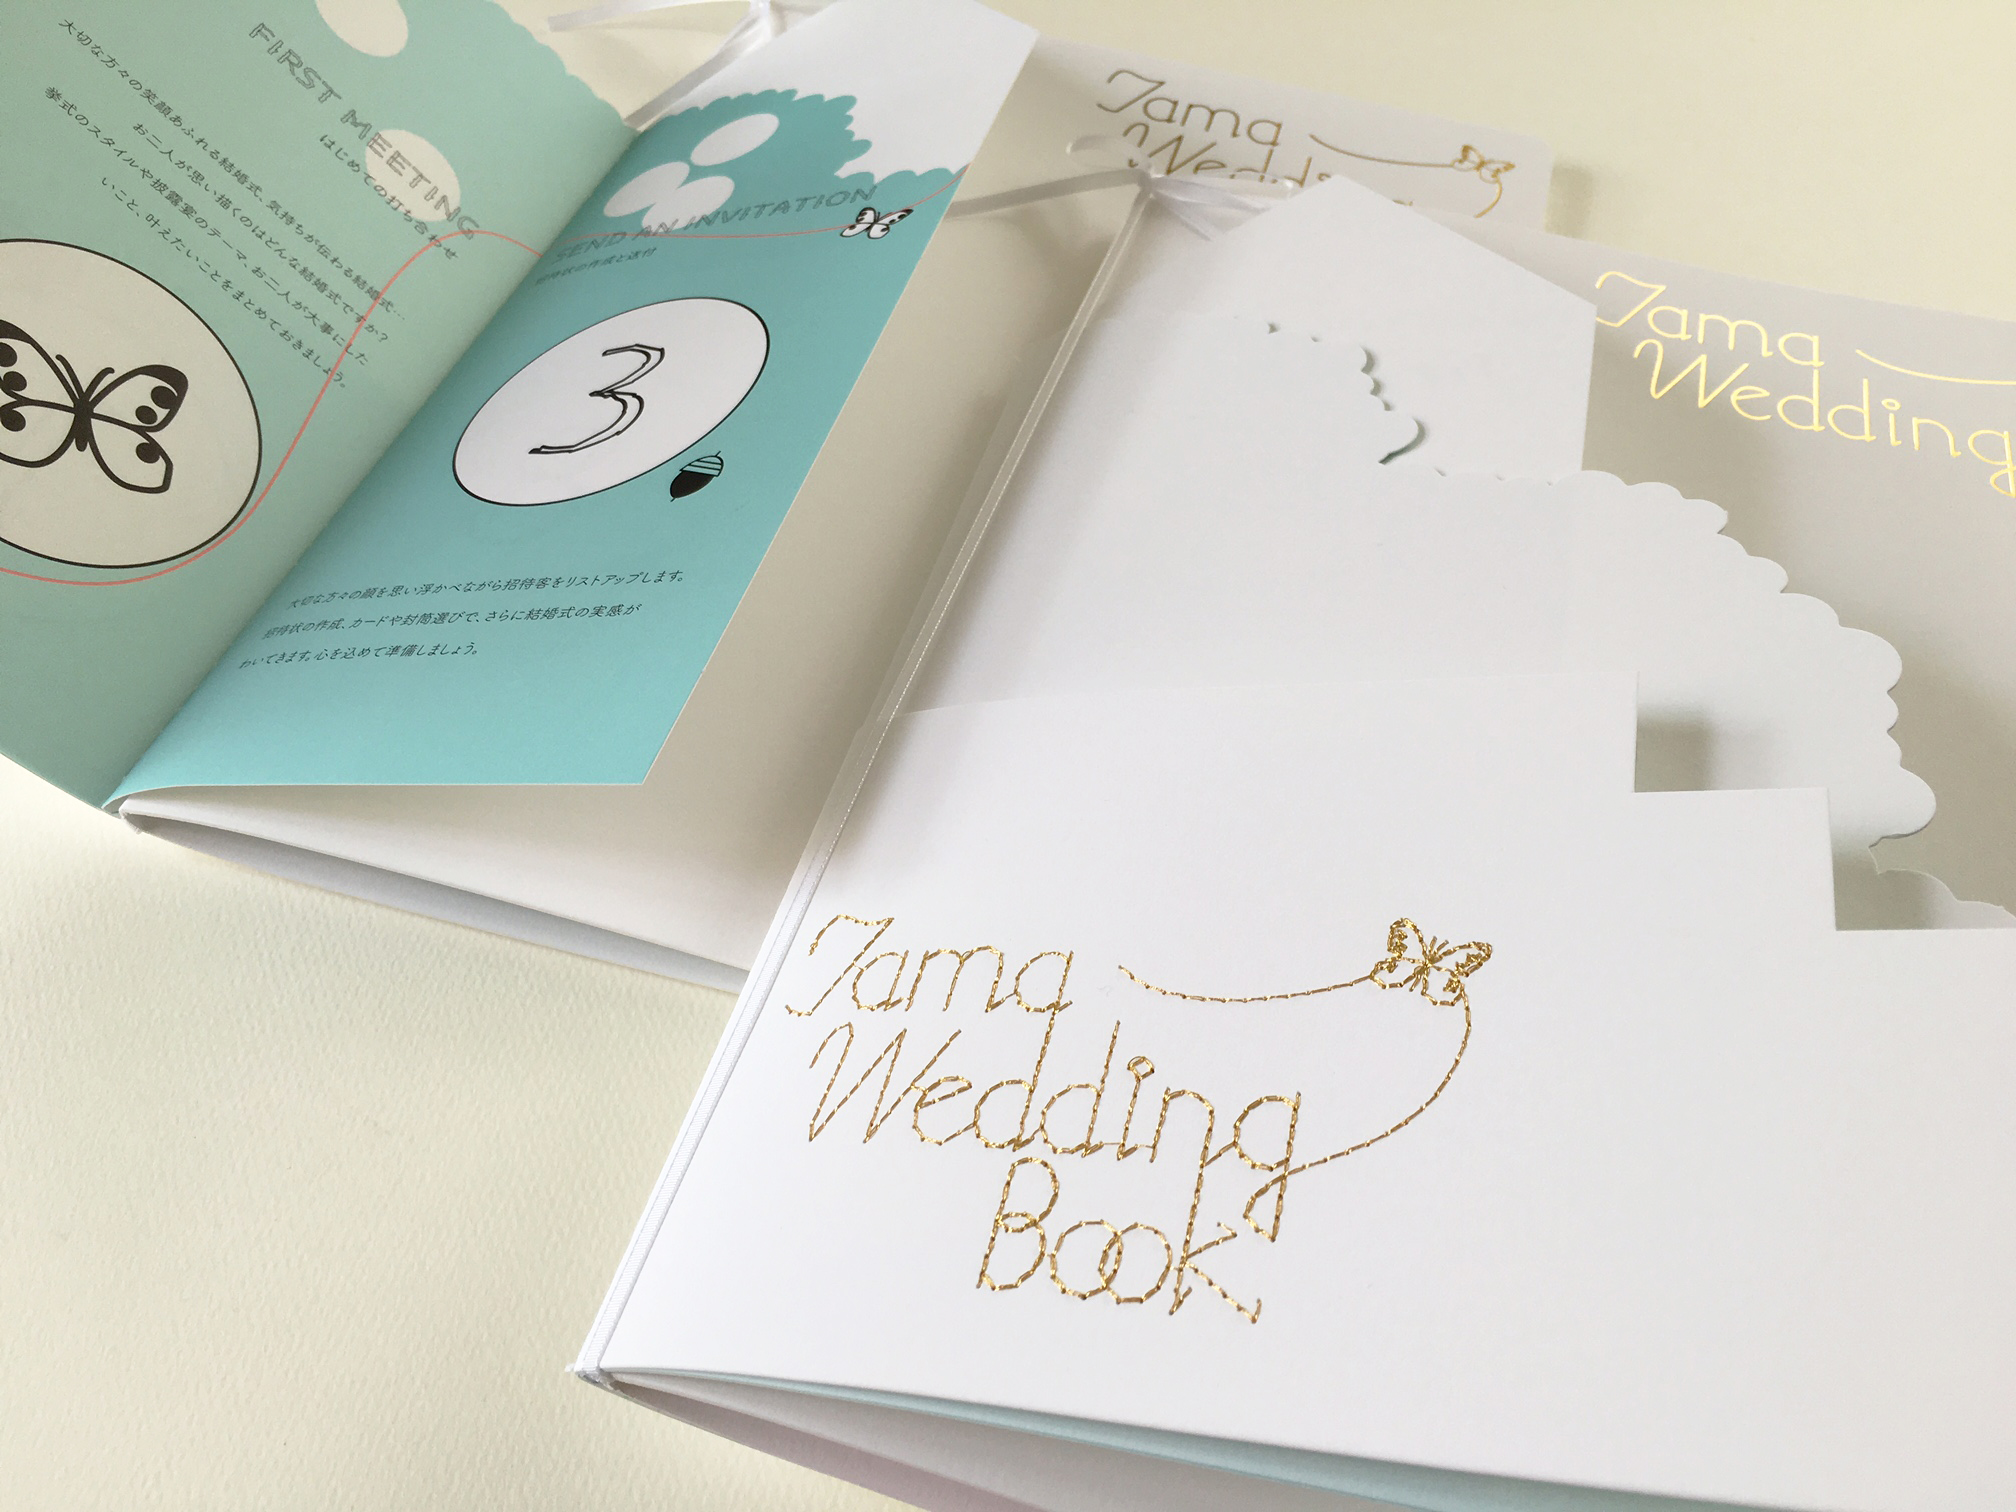 weddingBook2